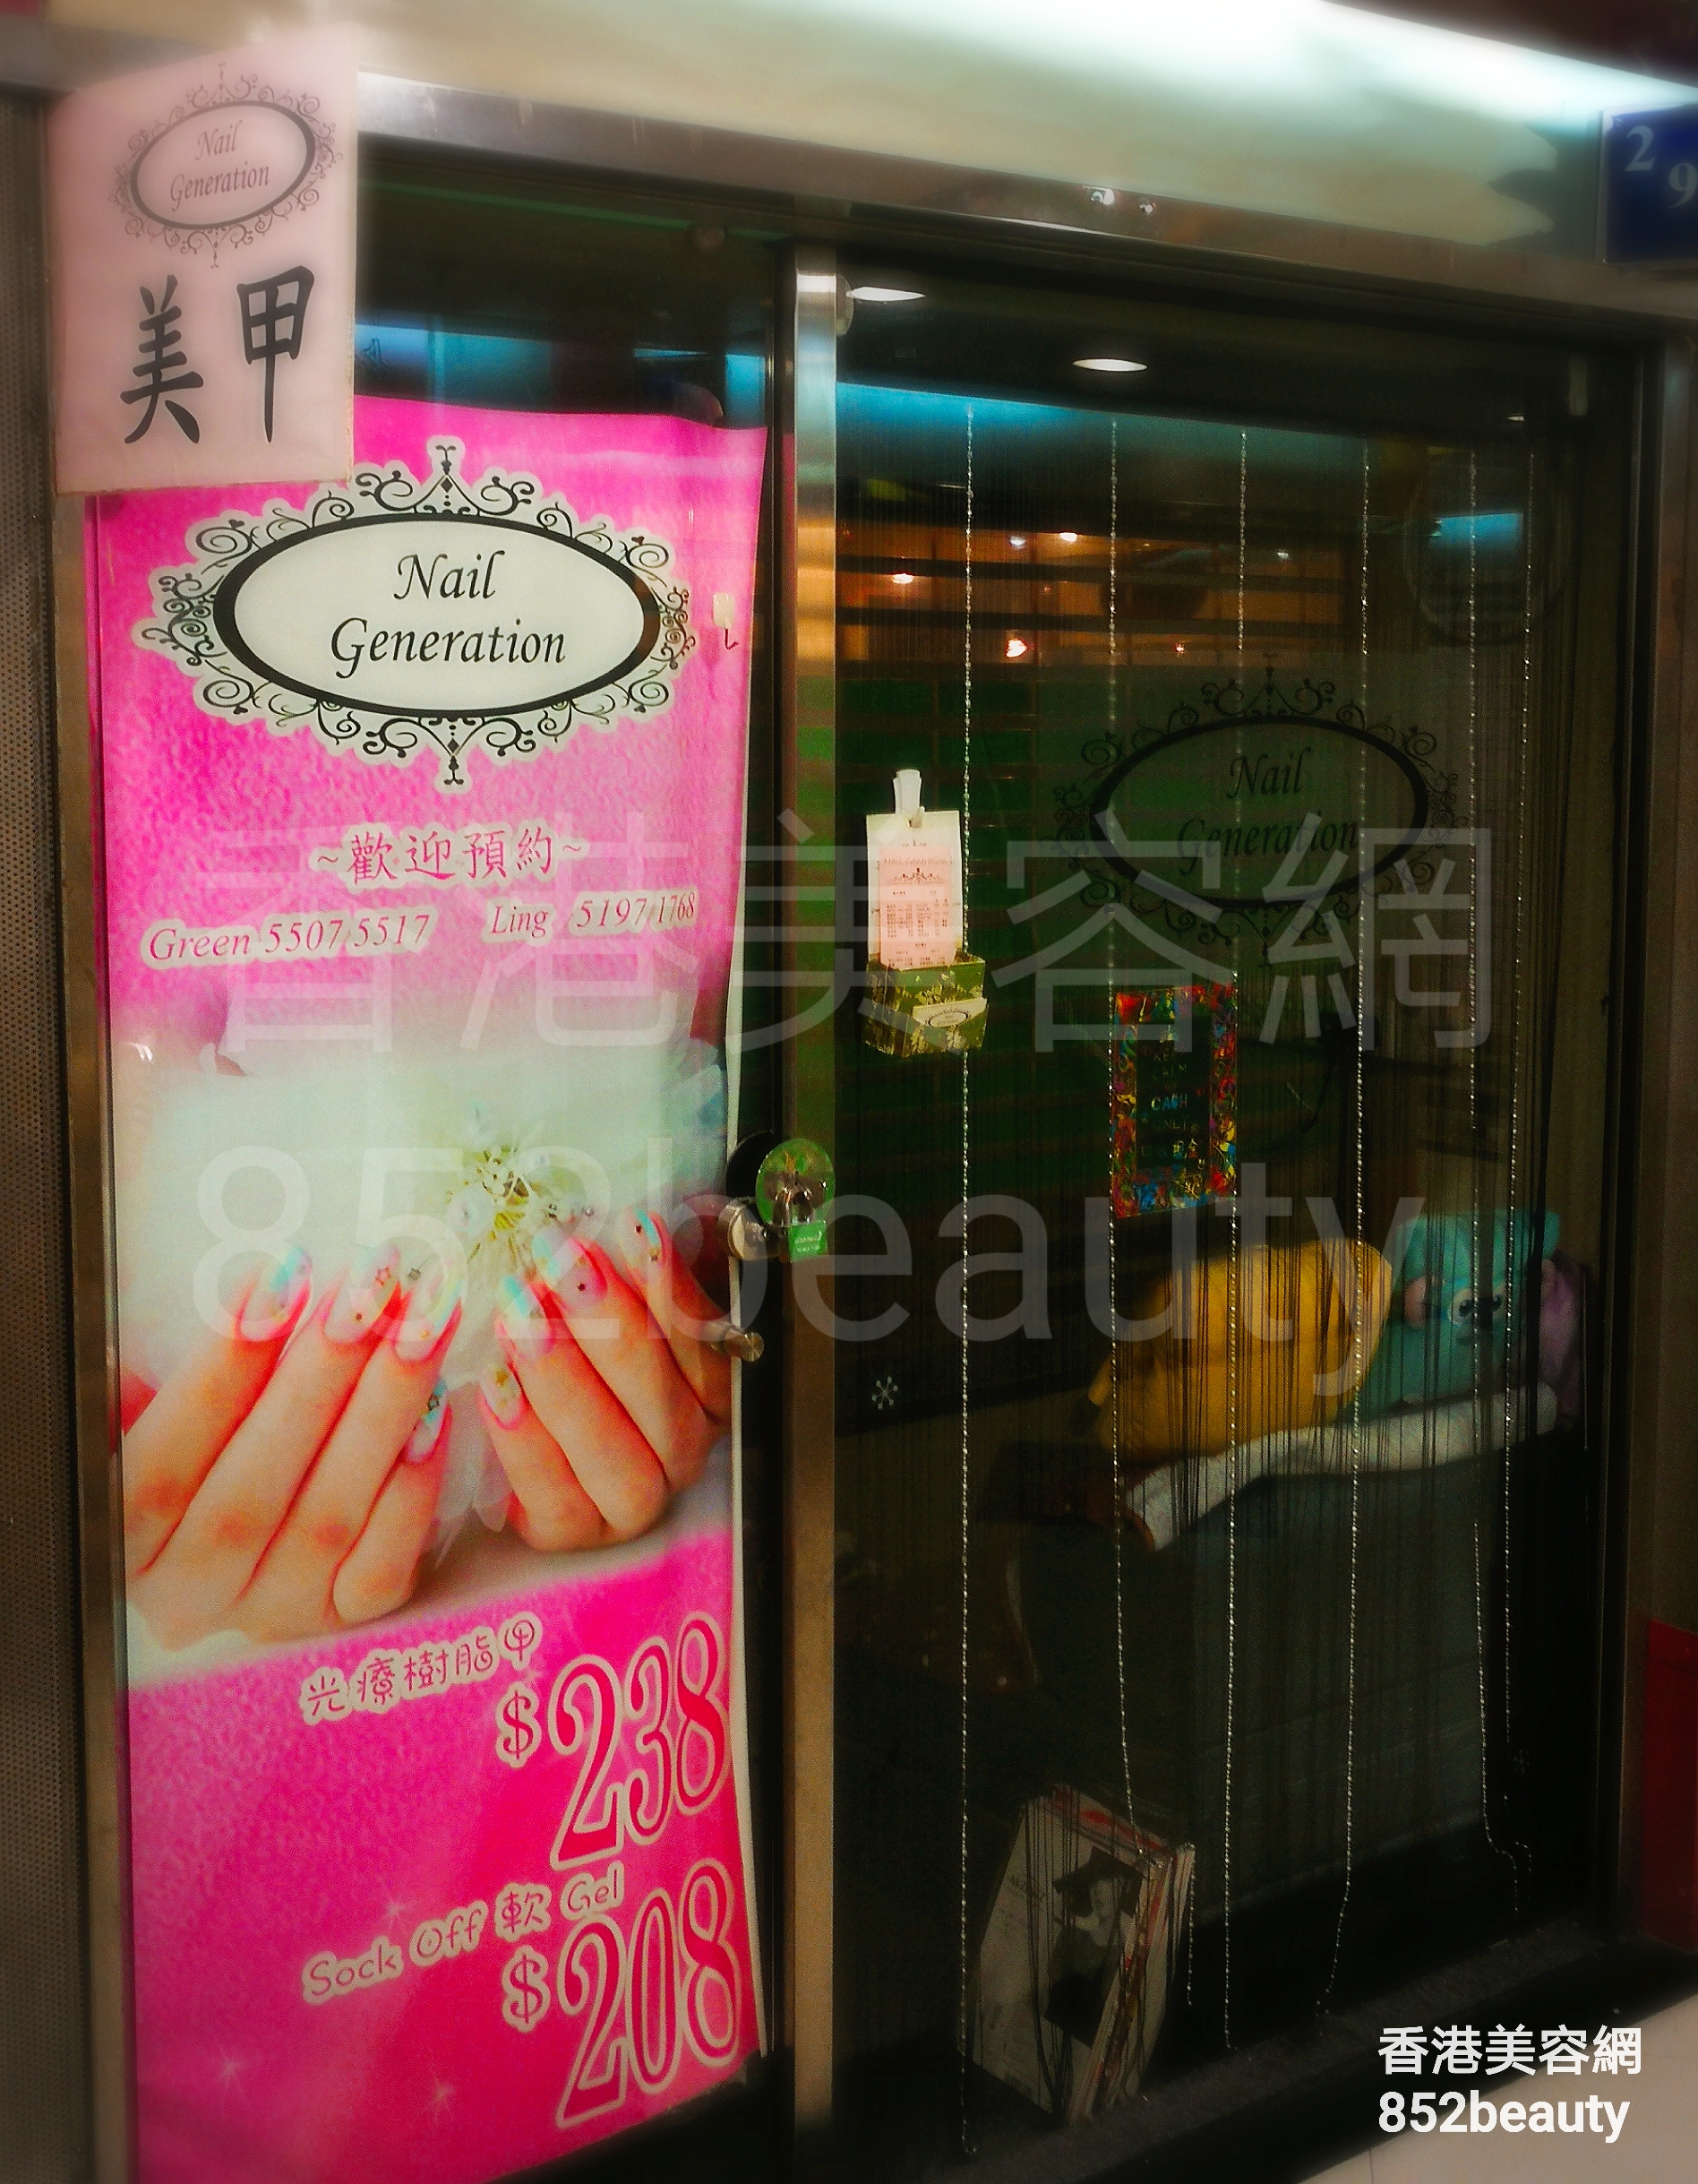 香港美容網 Hong Kong Beauty Salon 美容院 / 美容師: Nail Generation